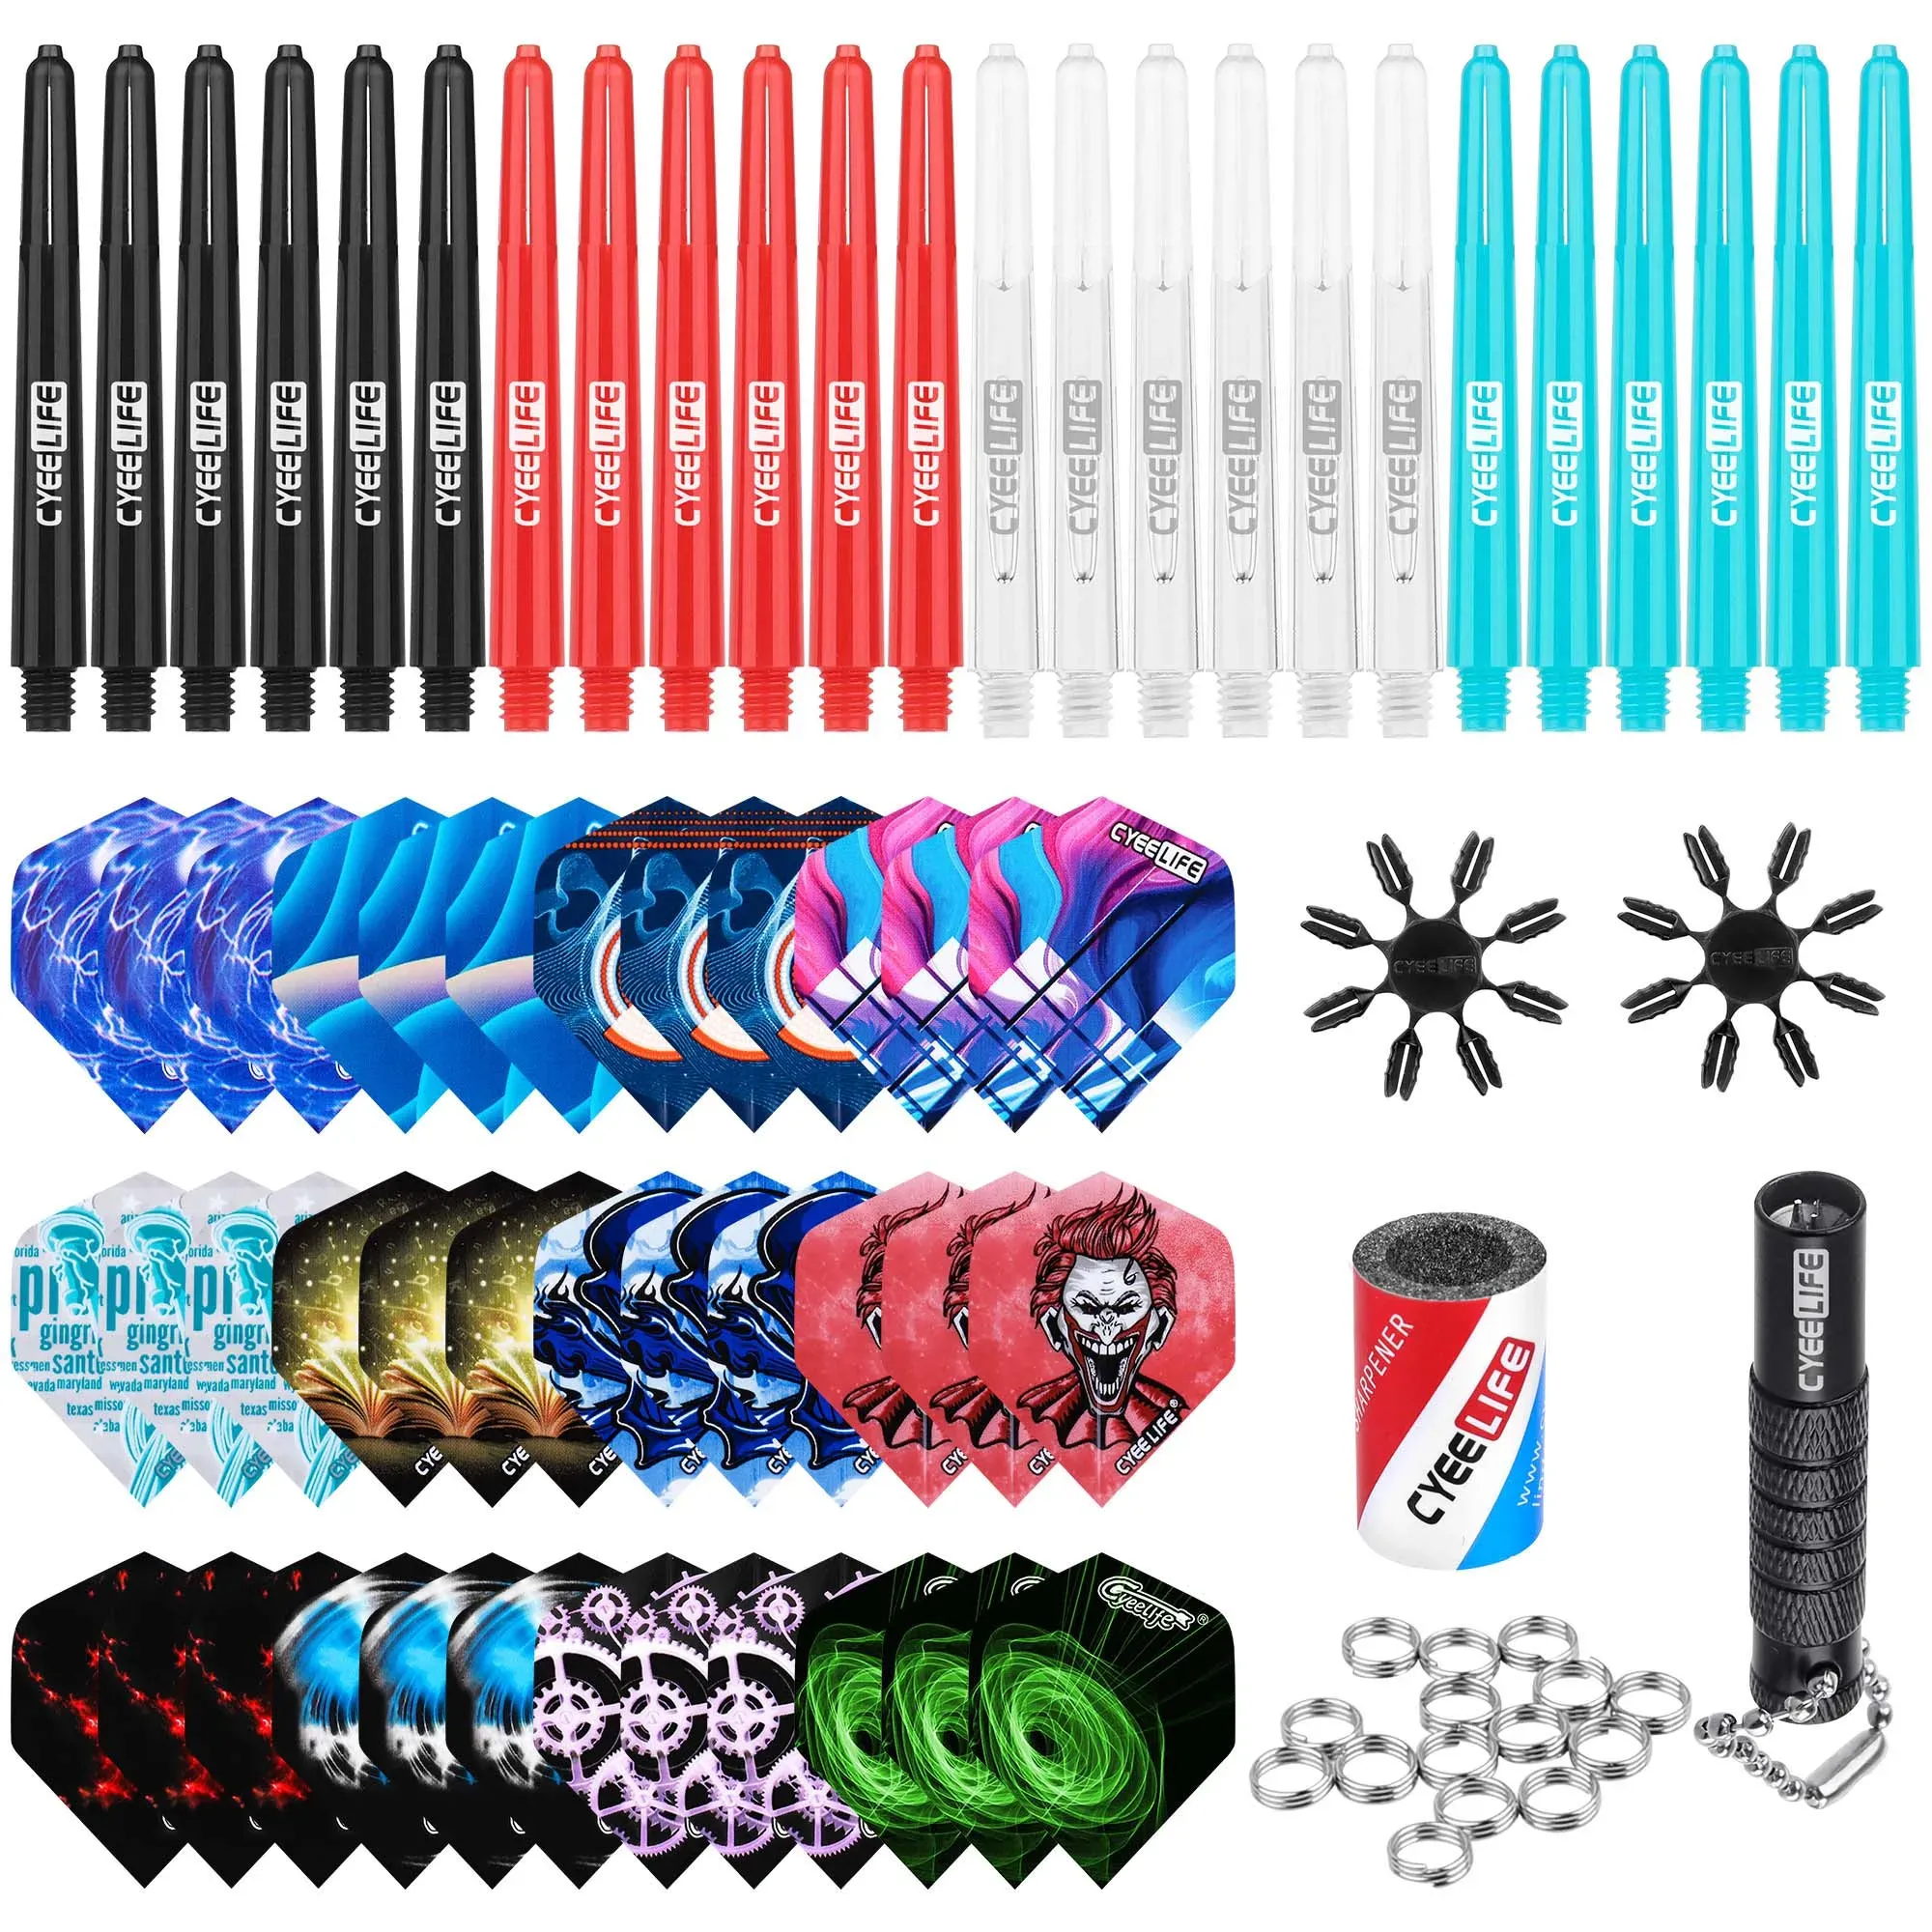 Darts CyeeLife Dart Accessories Kit,24 PVC Shafts+36 Flights+50 Metal O Rings+Remover Tool+16 Plastic Protectors